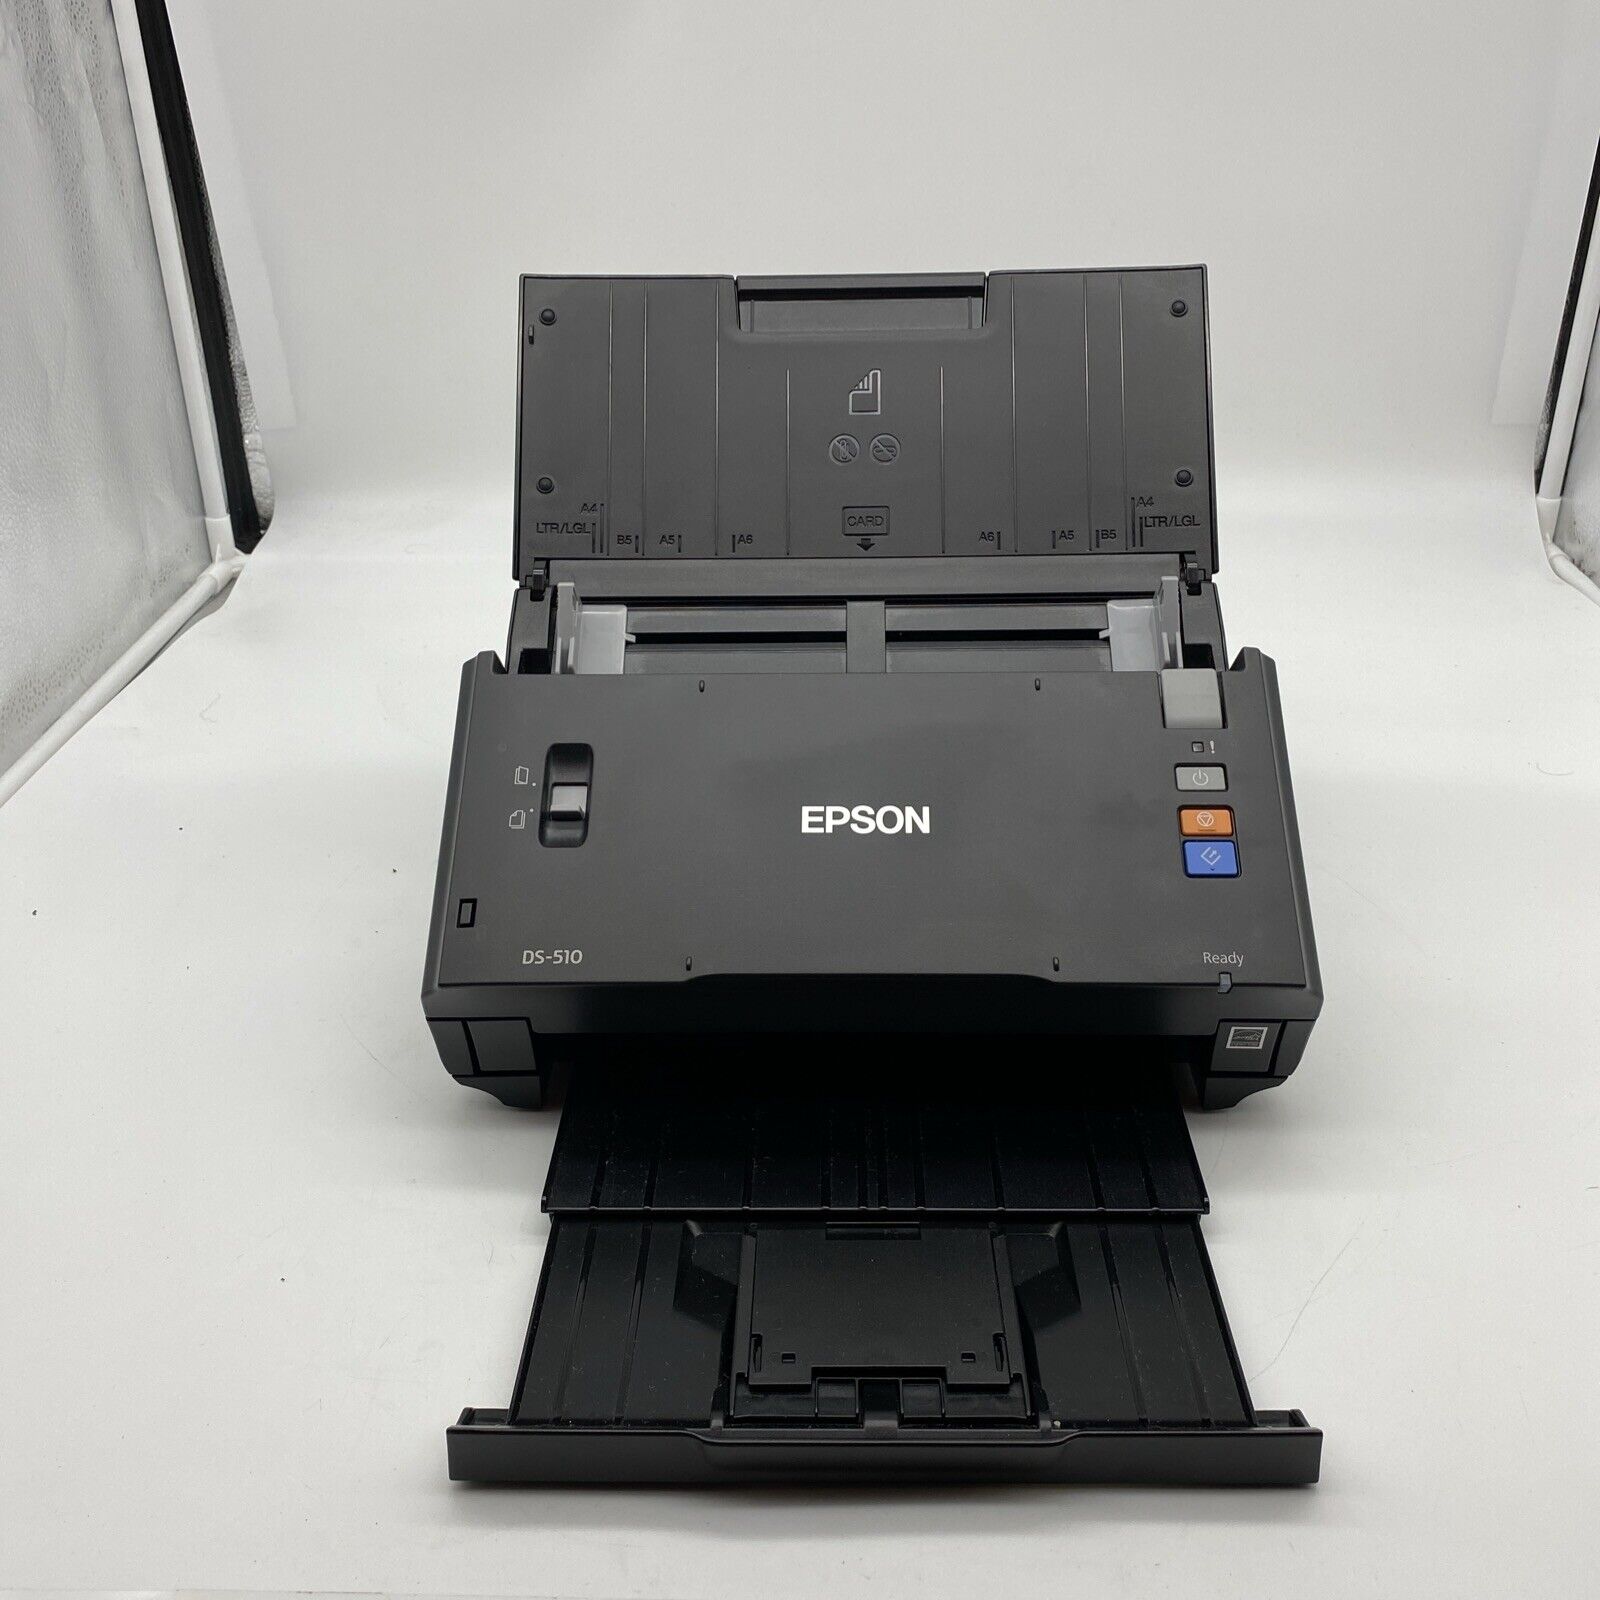 Epson DS-510 J341A Desktop Document Scanner